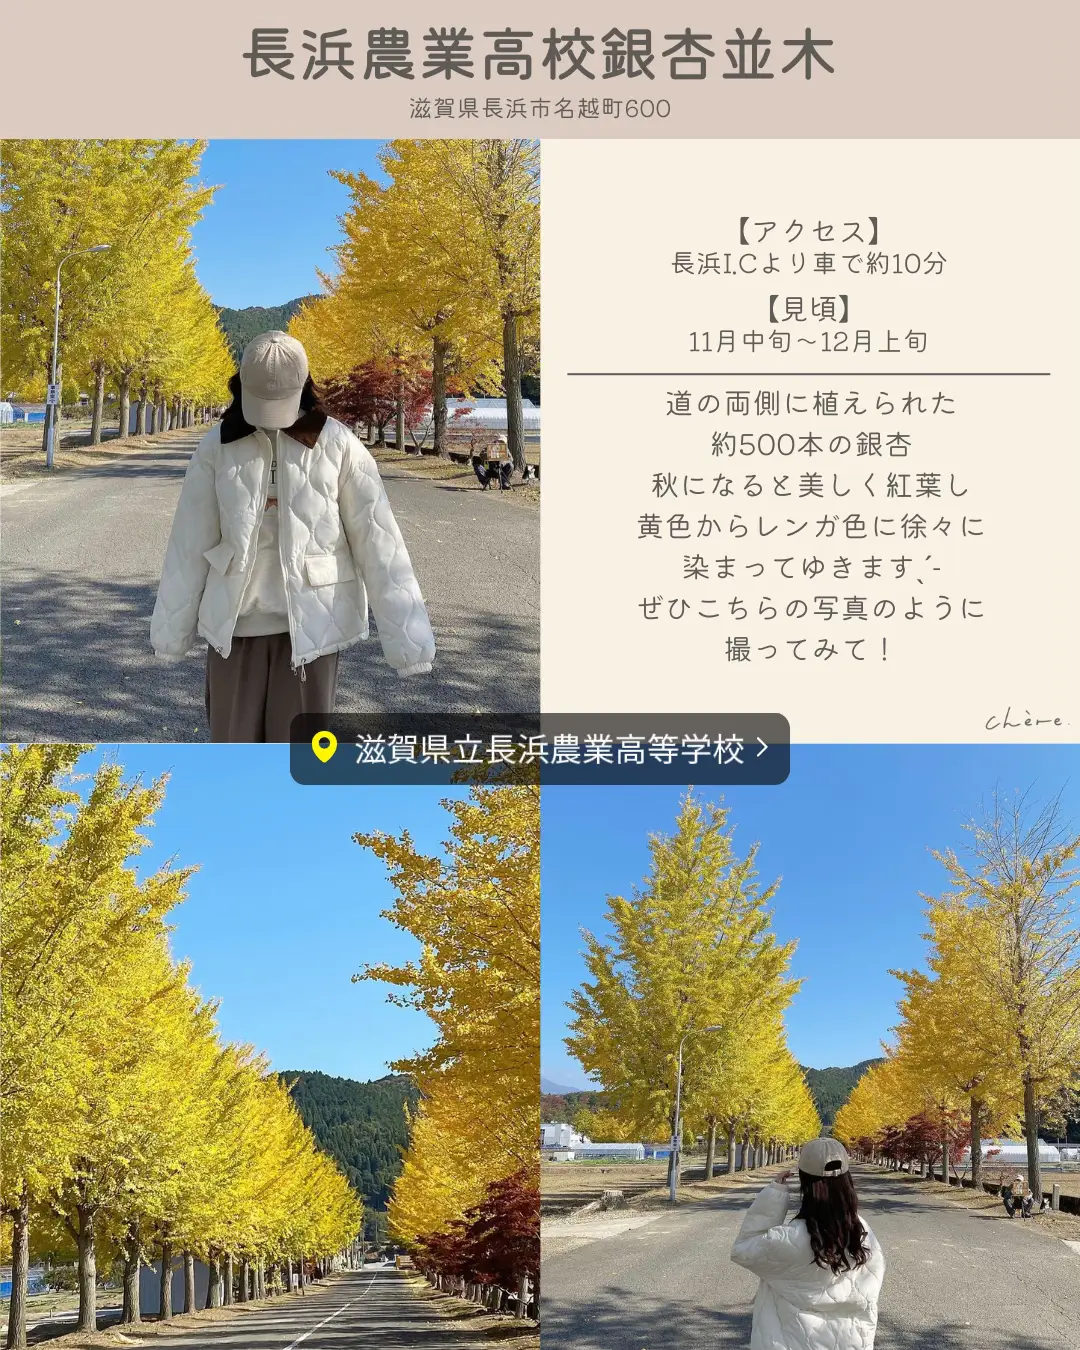 Enjoy the beauty of autumn - 【 Kansai 】 Autumn nature spot vol.2